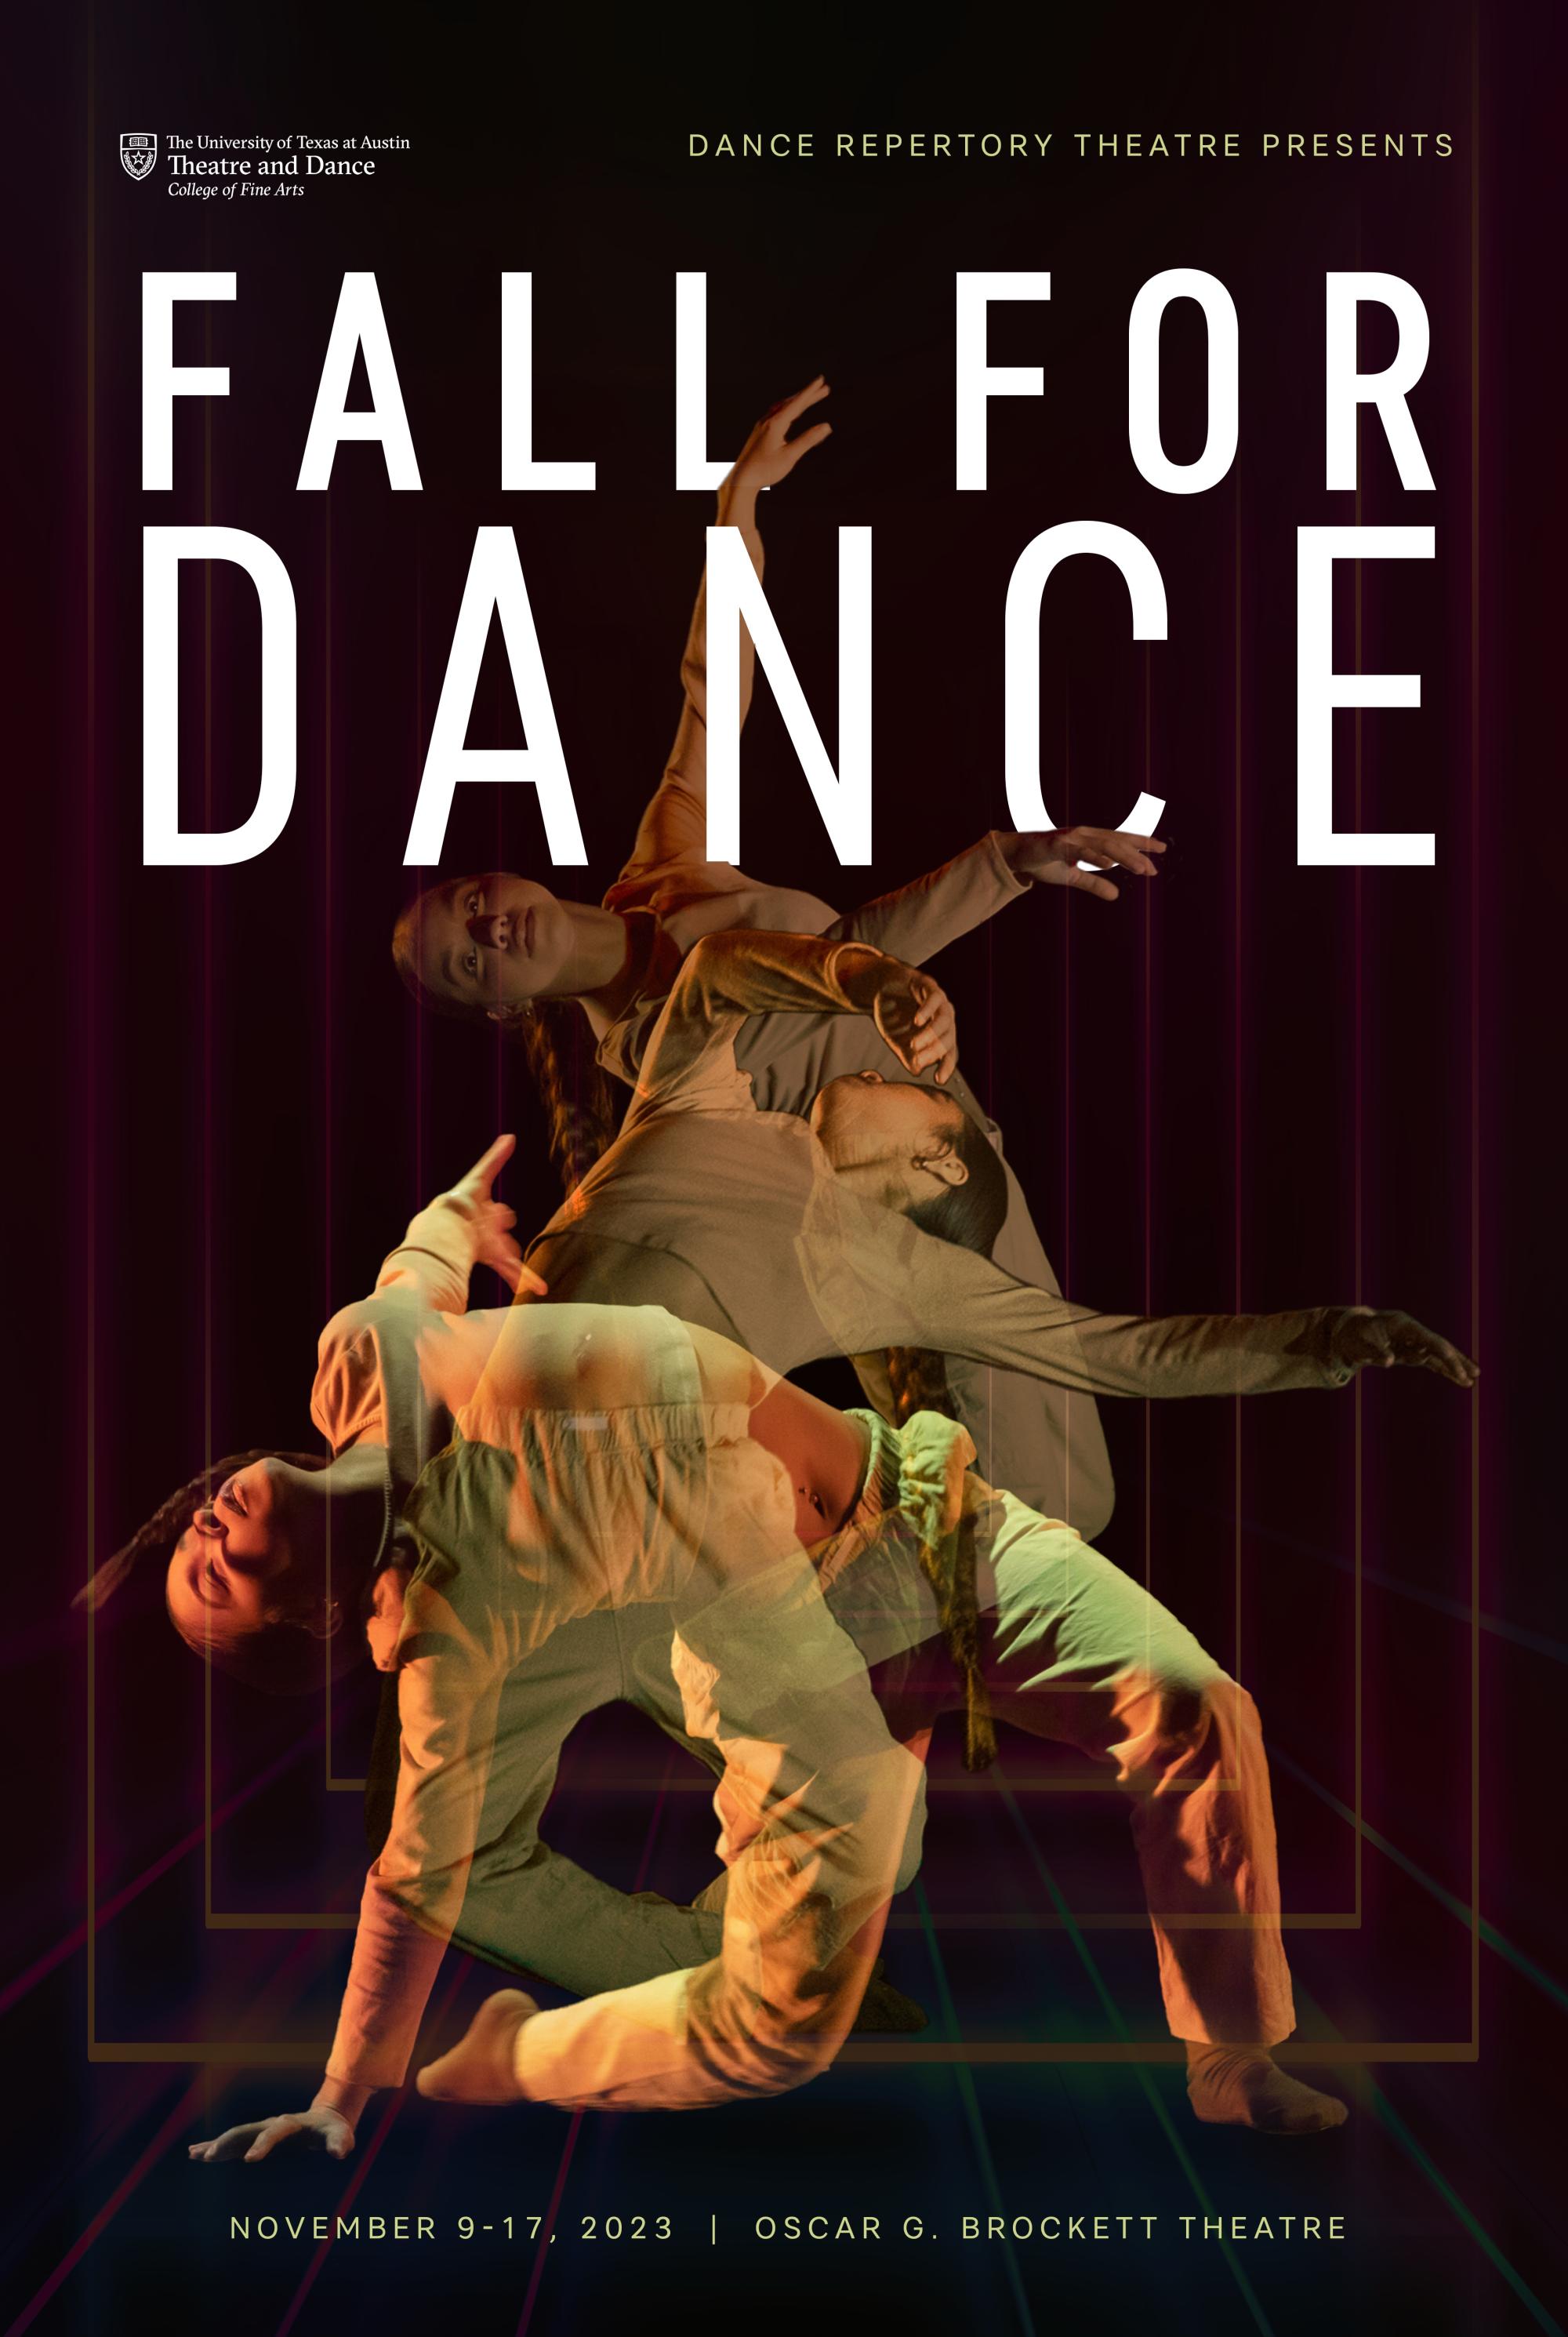 FFD 2023 falling dancer image